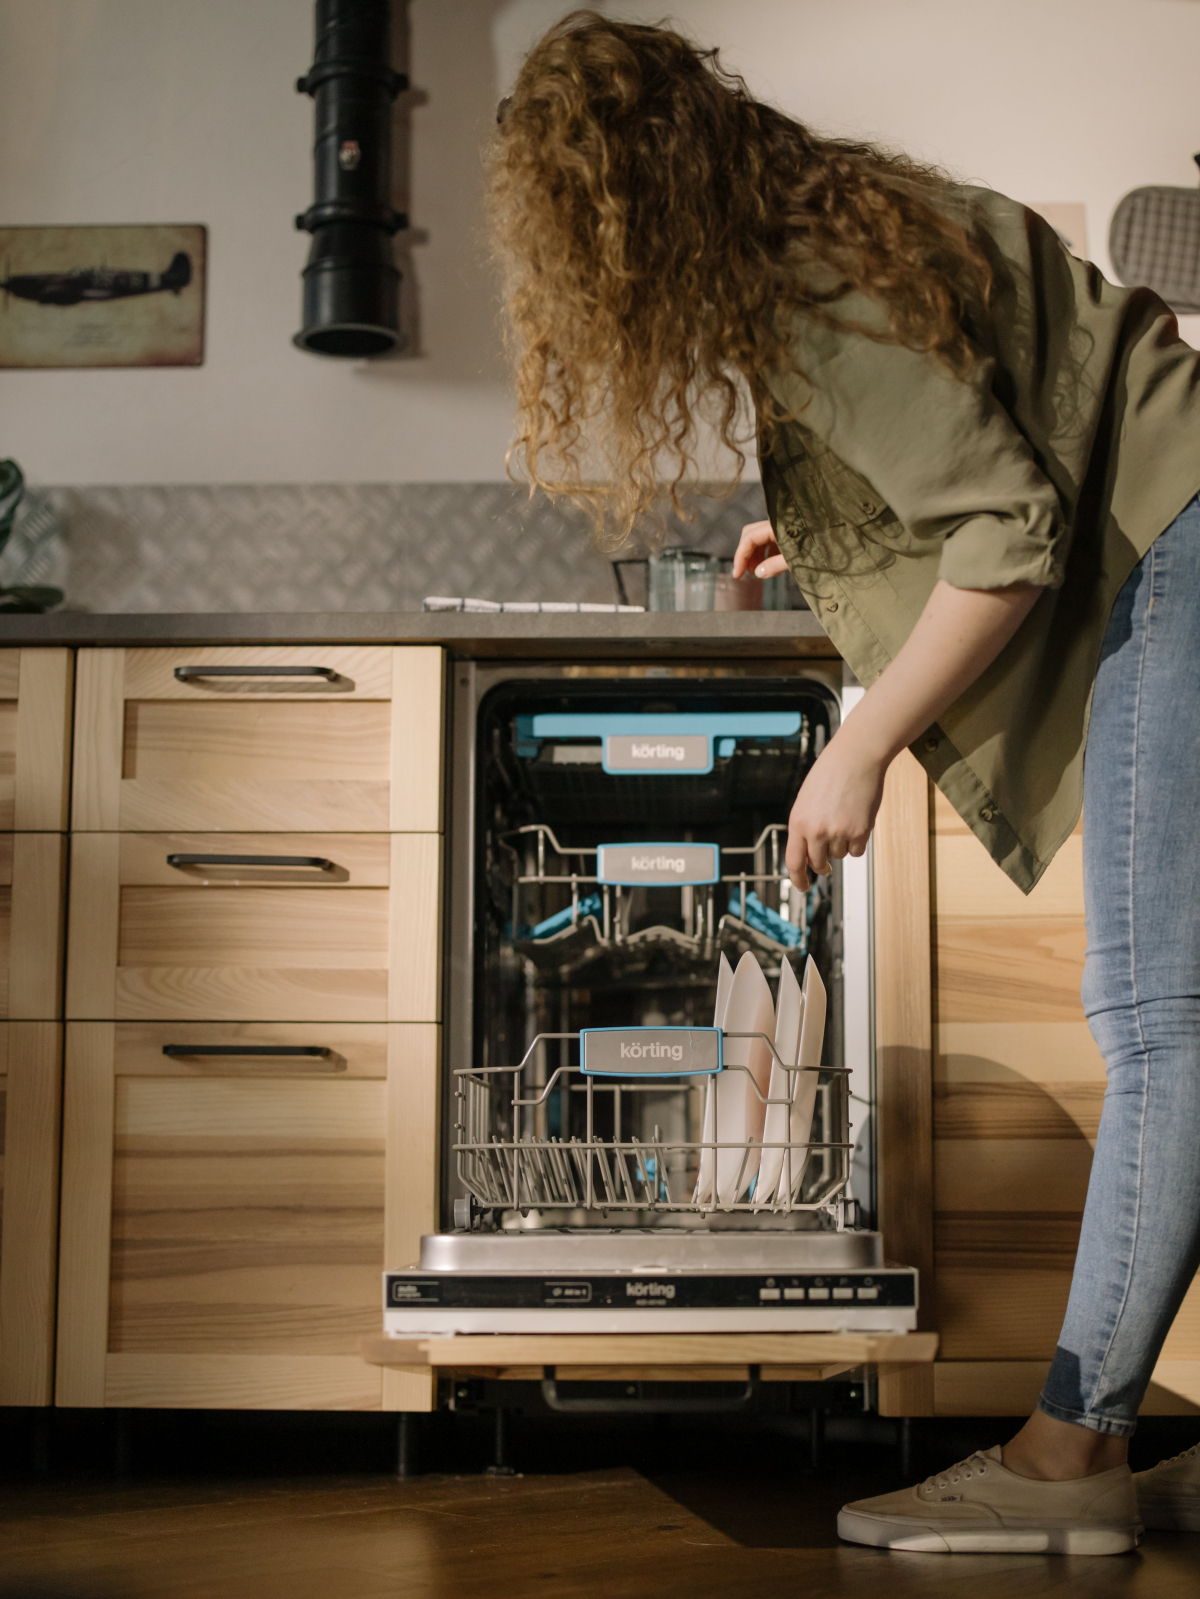 woman using a dishwasher